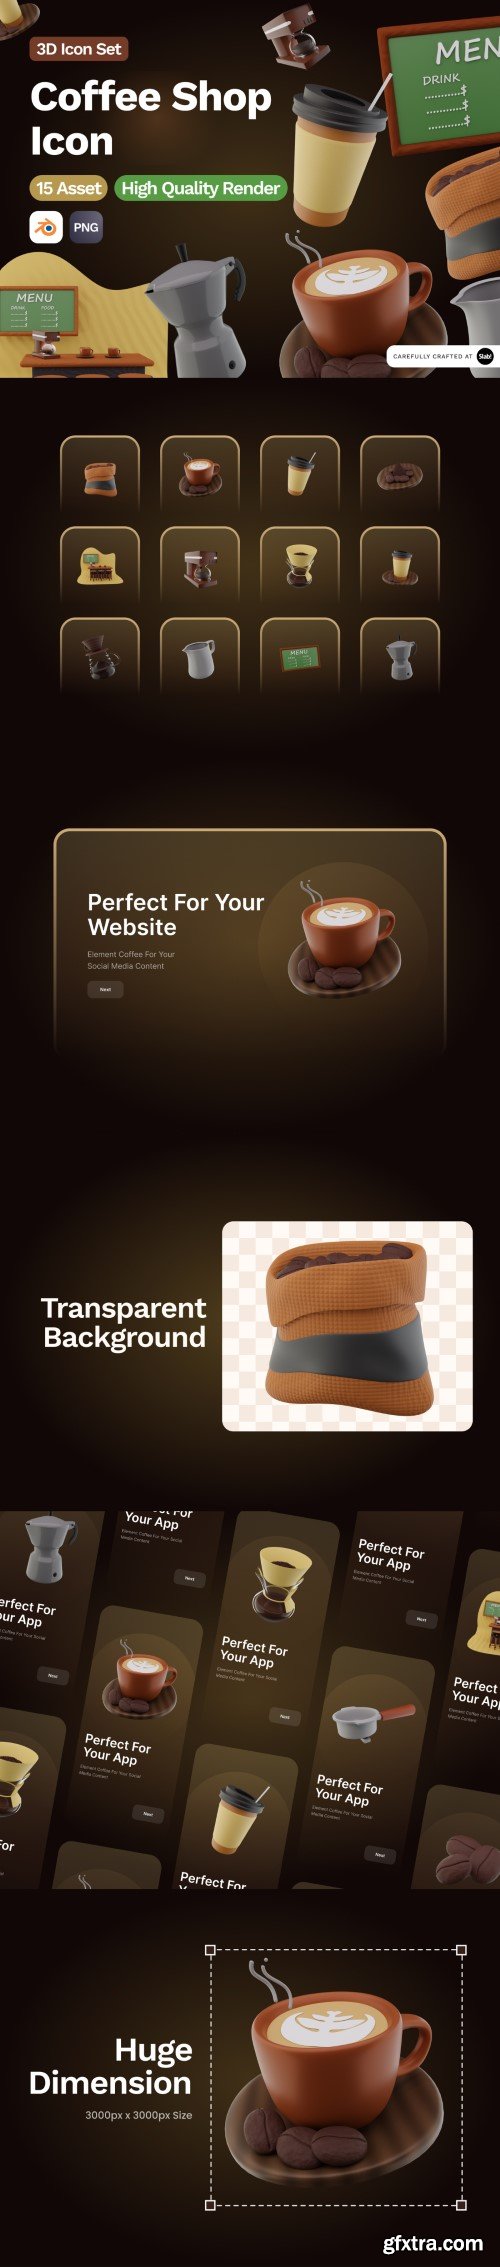 UI8 - 3D Coffee Shop Icon